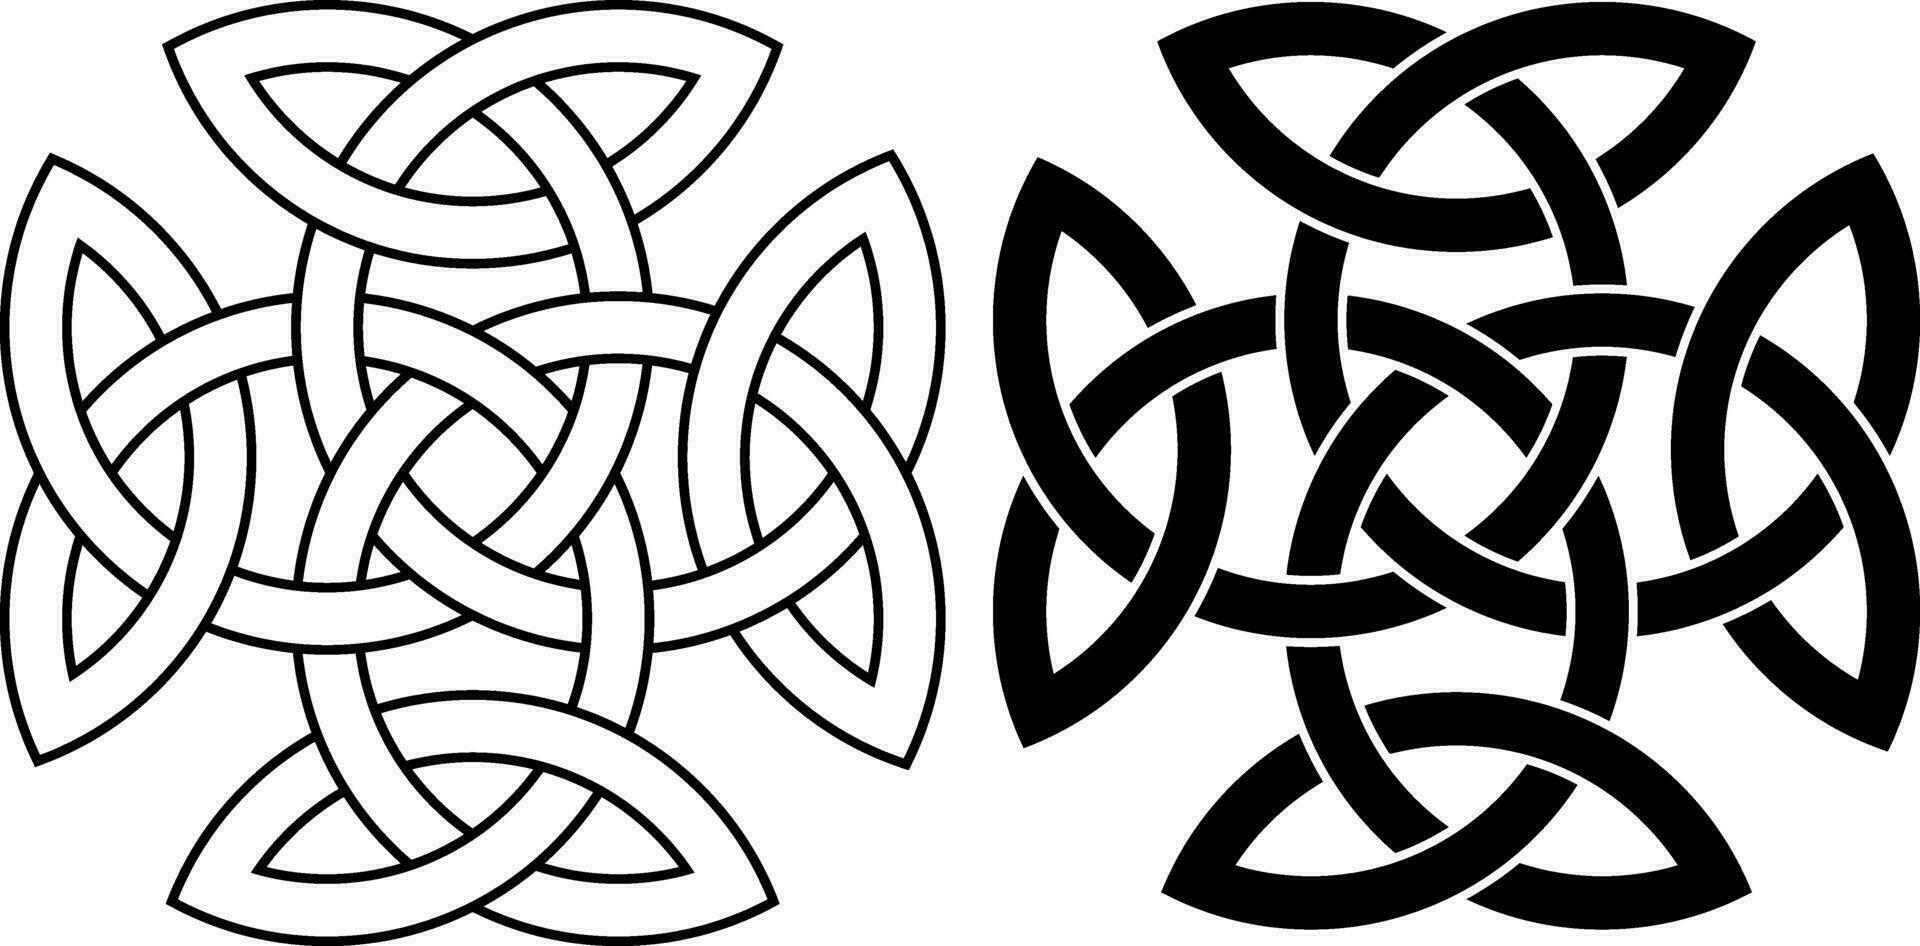 four interlaced triquetra.Celtic Triquetra knot sign vector